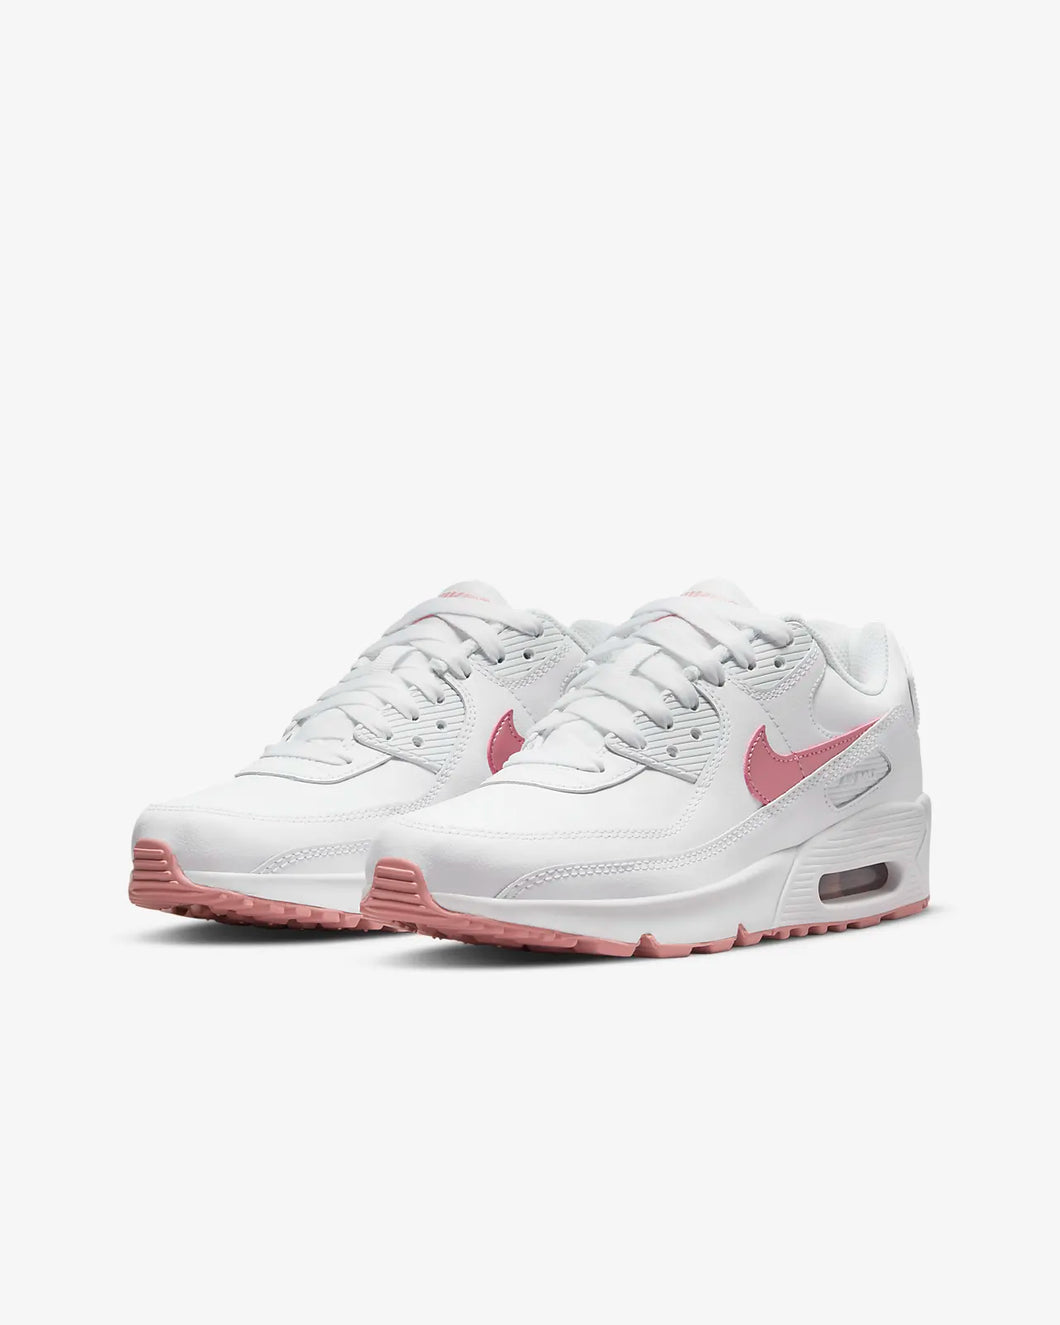 Nike Air Max 90 LTR CD6864-115 White Pink